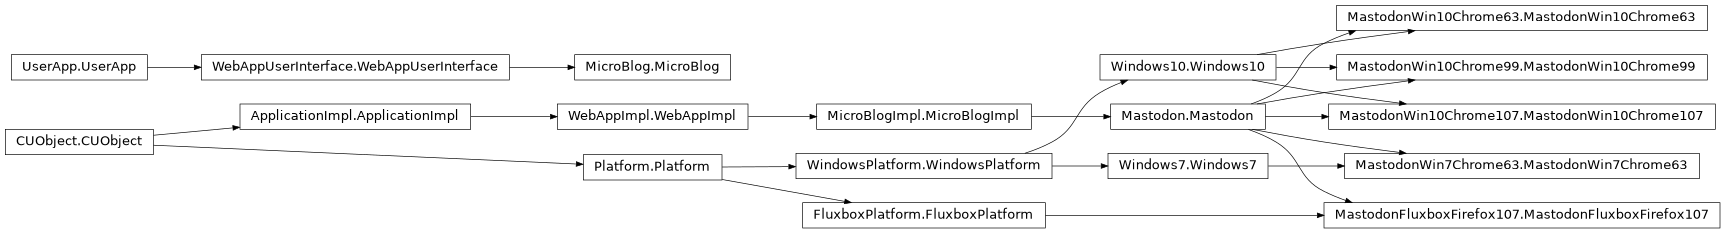 Inheritance diagram of MicroBlog, MicroBlogImpl, Mastodon, MastodonWin10Chrome107, MastodonWin10Chrome63, MastodonWin10Chrome99, MastodonWin7Chrome63, MastodonFluxboxFirefox107